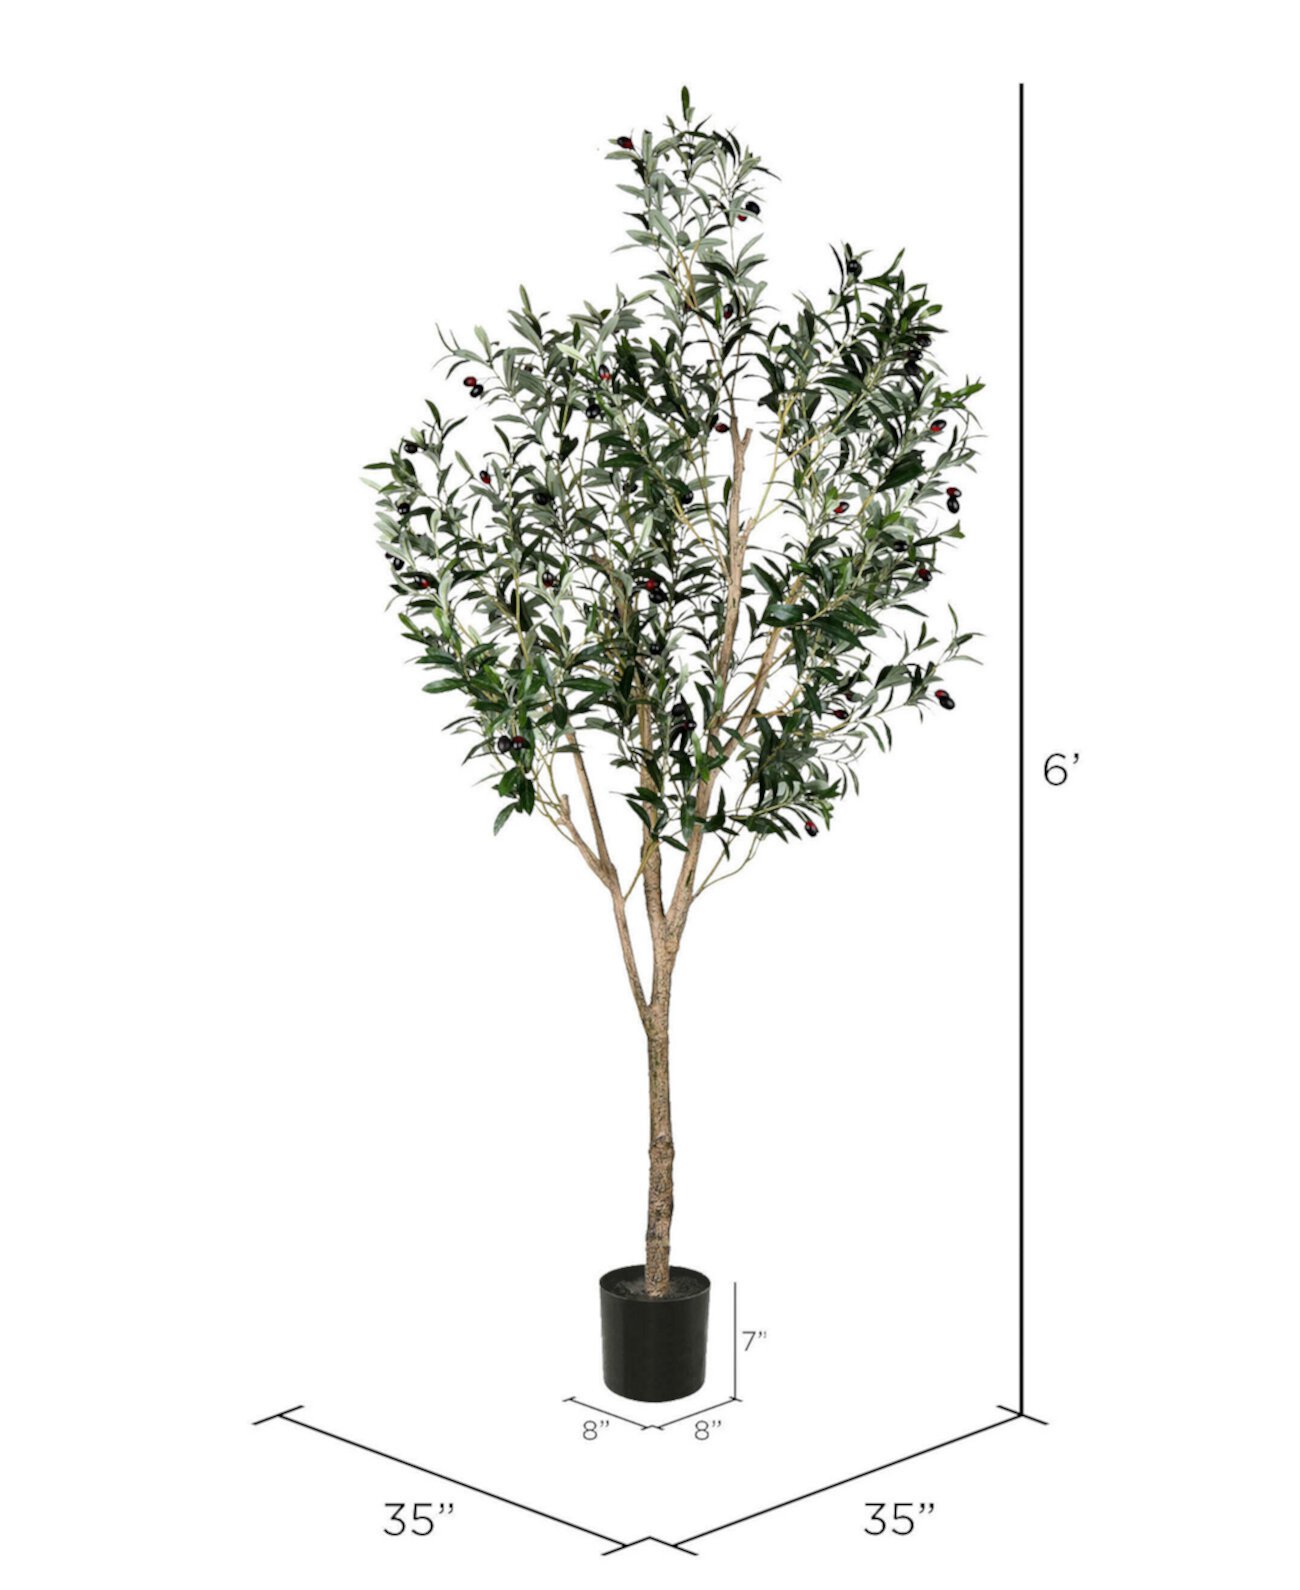 72" Artificial Olive Tree in Black Planters Pot Vickerman